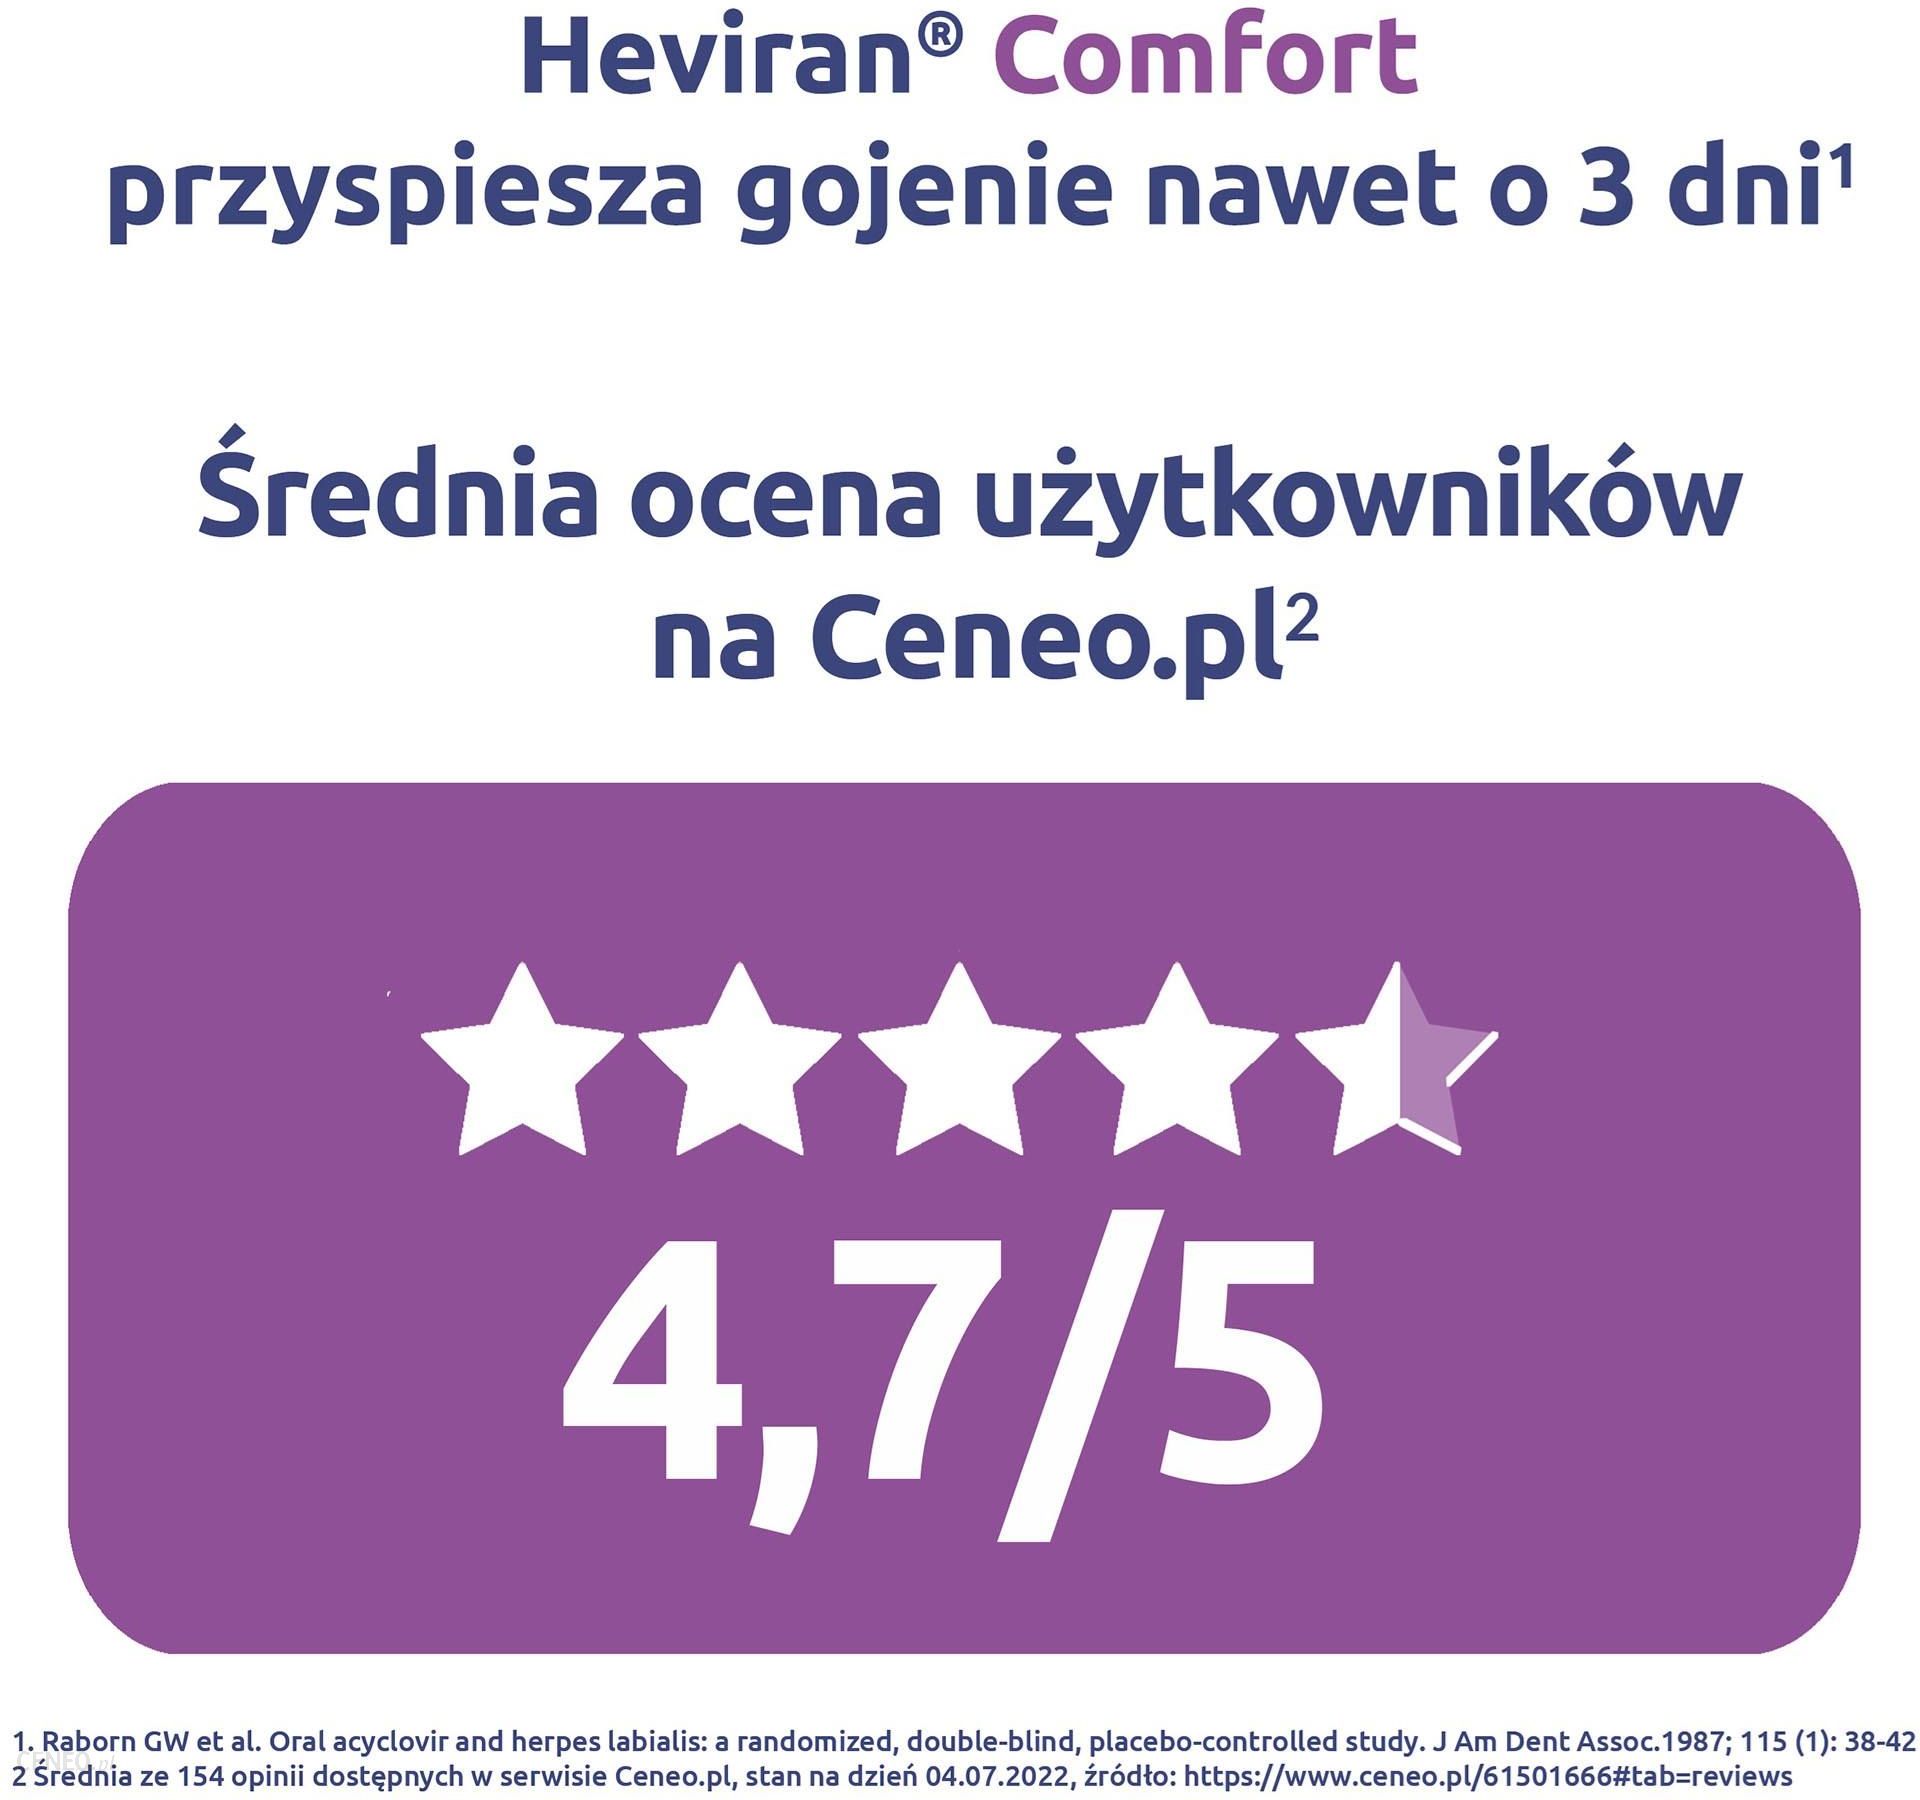 Heviran Comfort 200mg 25 tabl